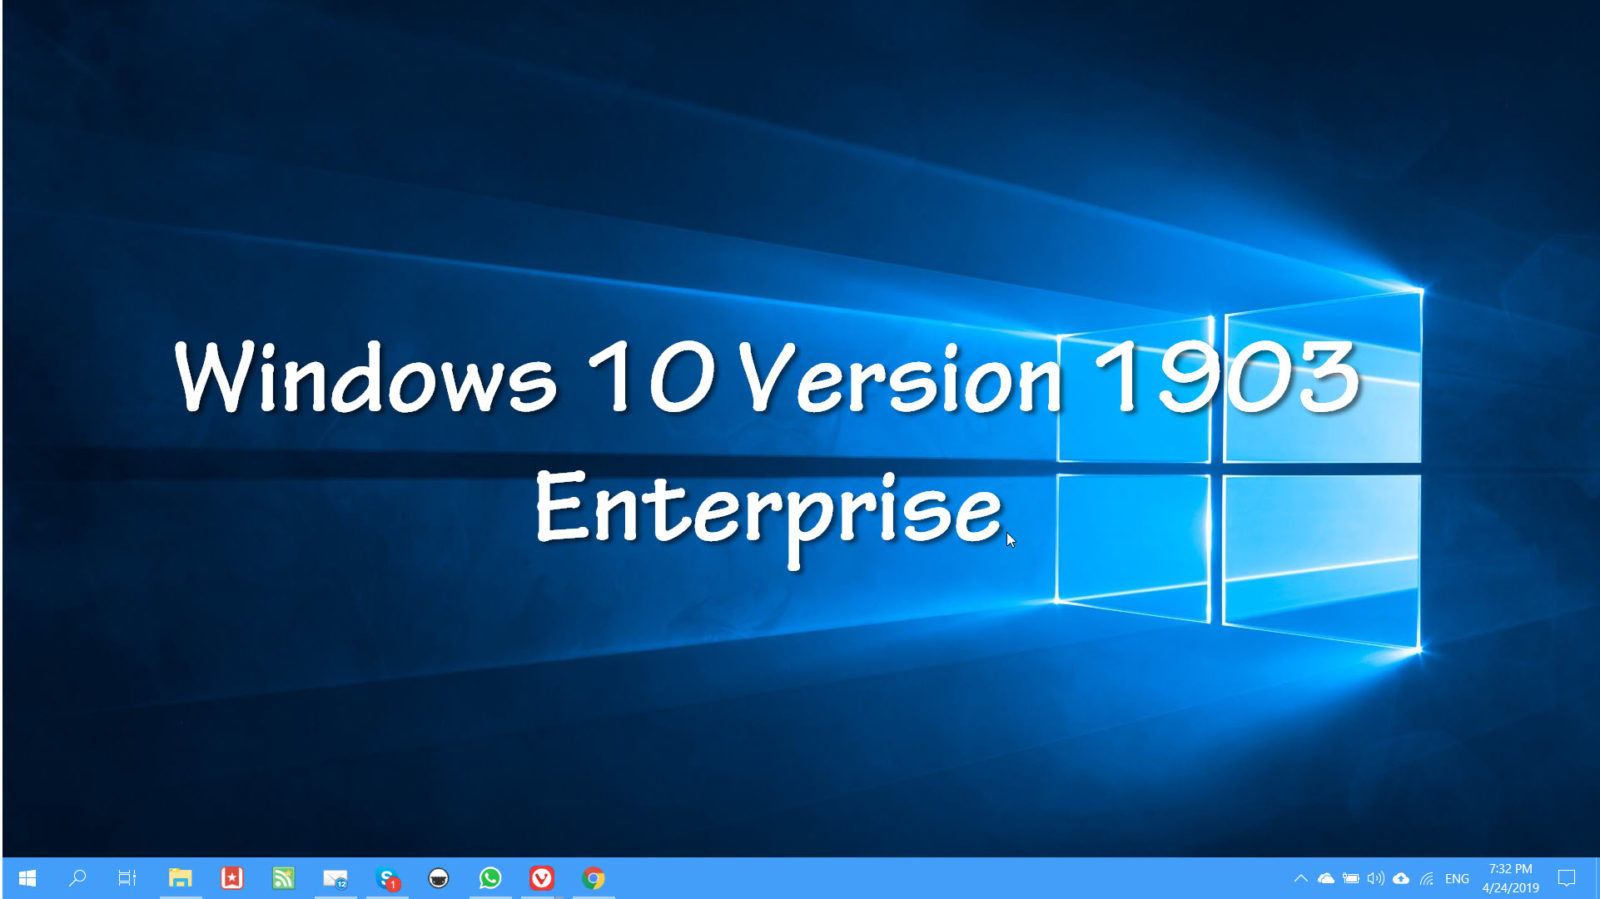 windows 10 pro x64 1903 download